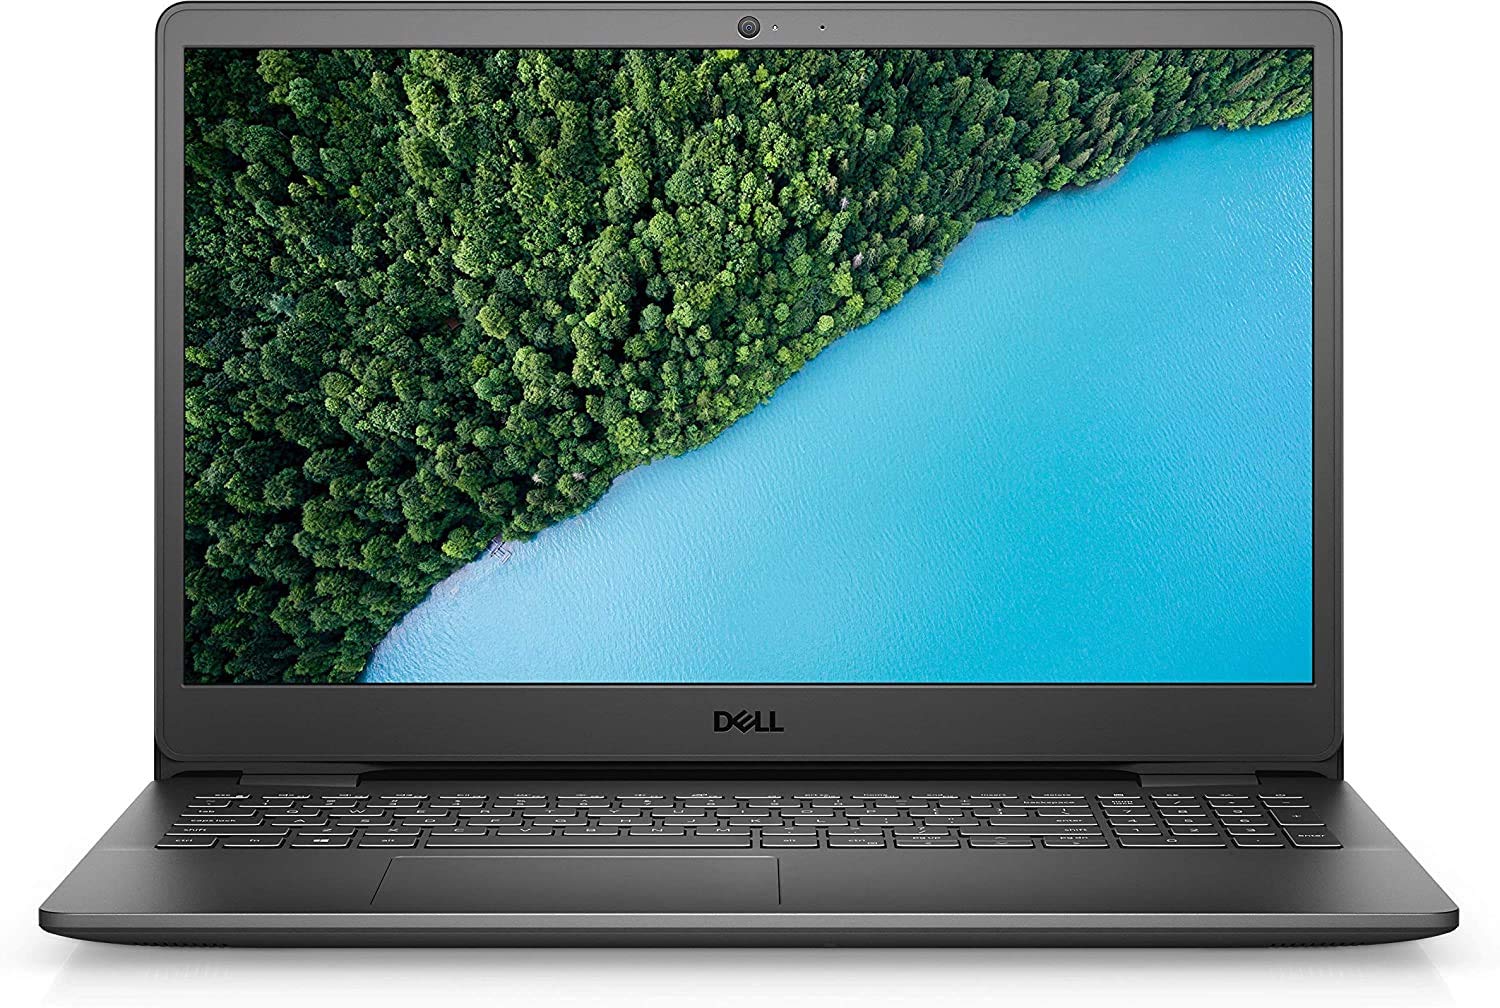 2021 Dell Inspiron 15.6" HD Laptop, Dual Cores Intel Celeron 4205U, Intel HD Graphics 610, 8GB RAM, 512GB NVMe SSD + 1TB HDD, USB 3.2 Type-A, WiFi 5, Bluetooth, HDMI, SD Card Reader, Win 10 in S Mode